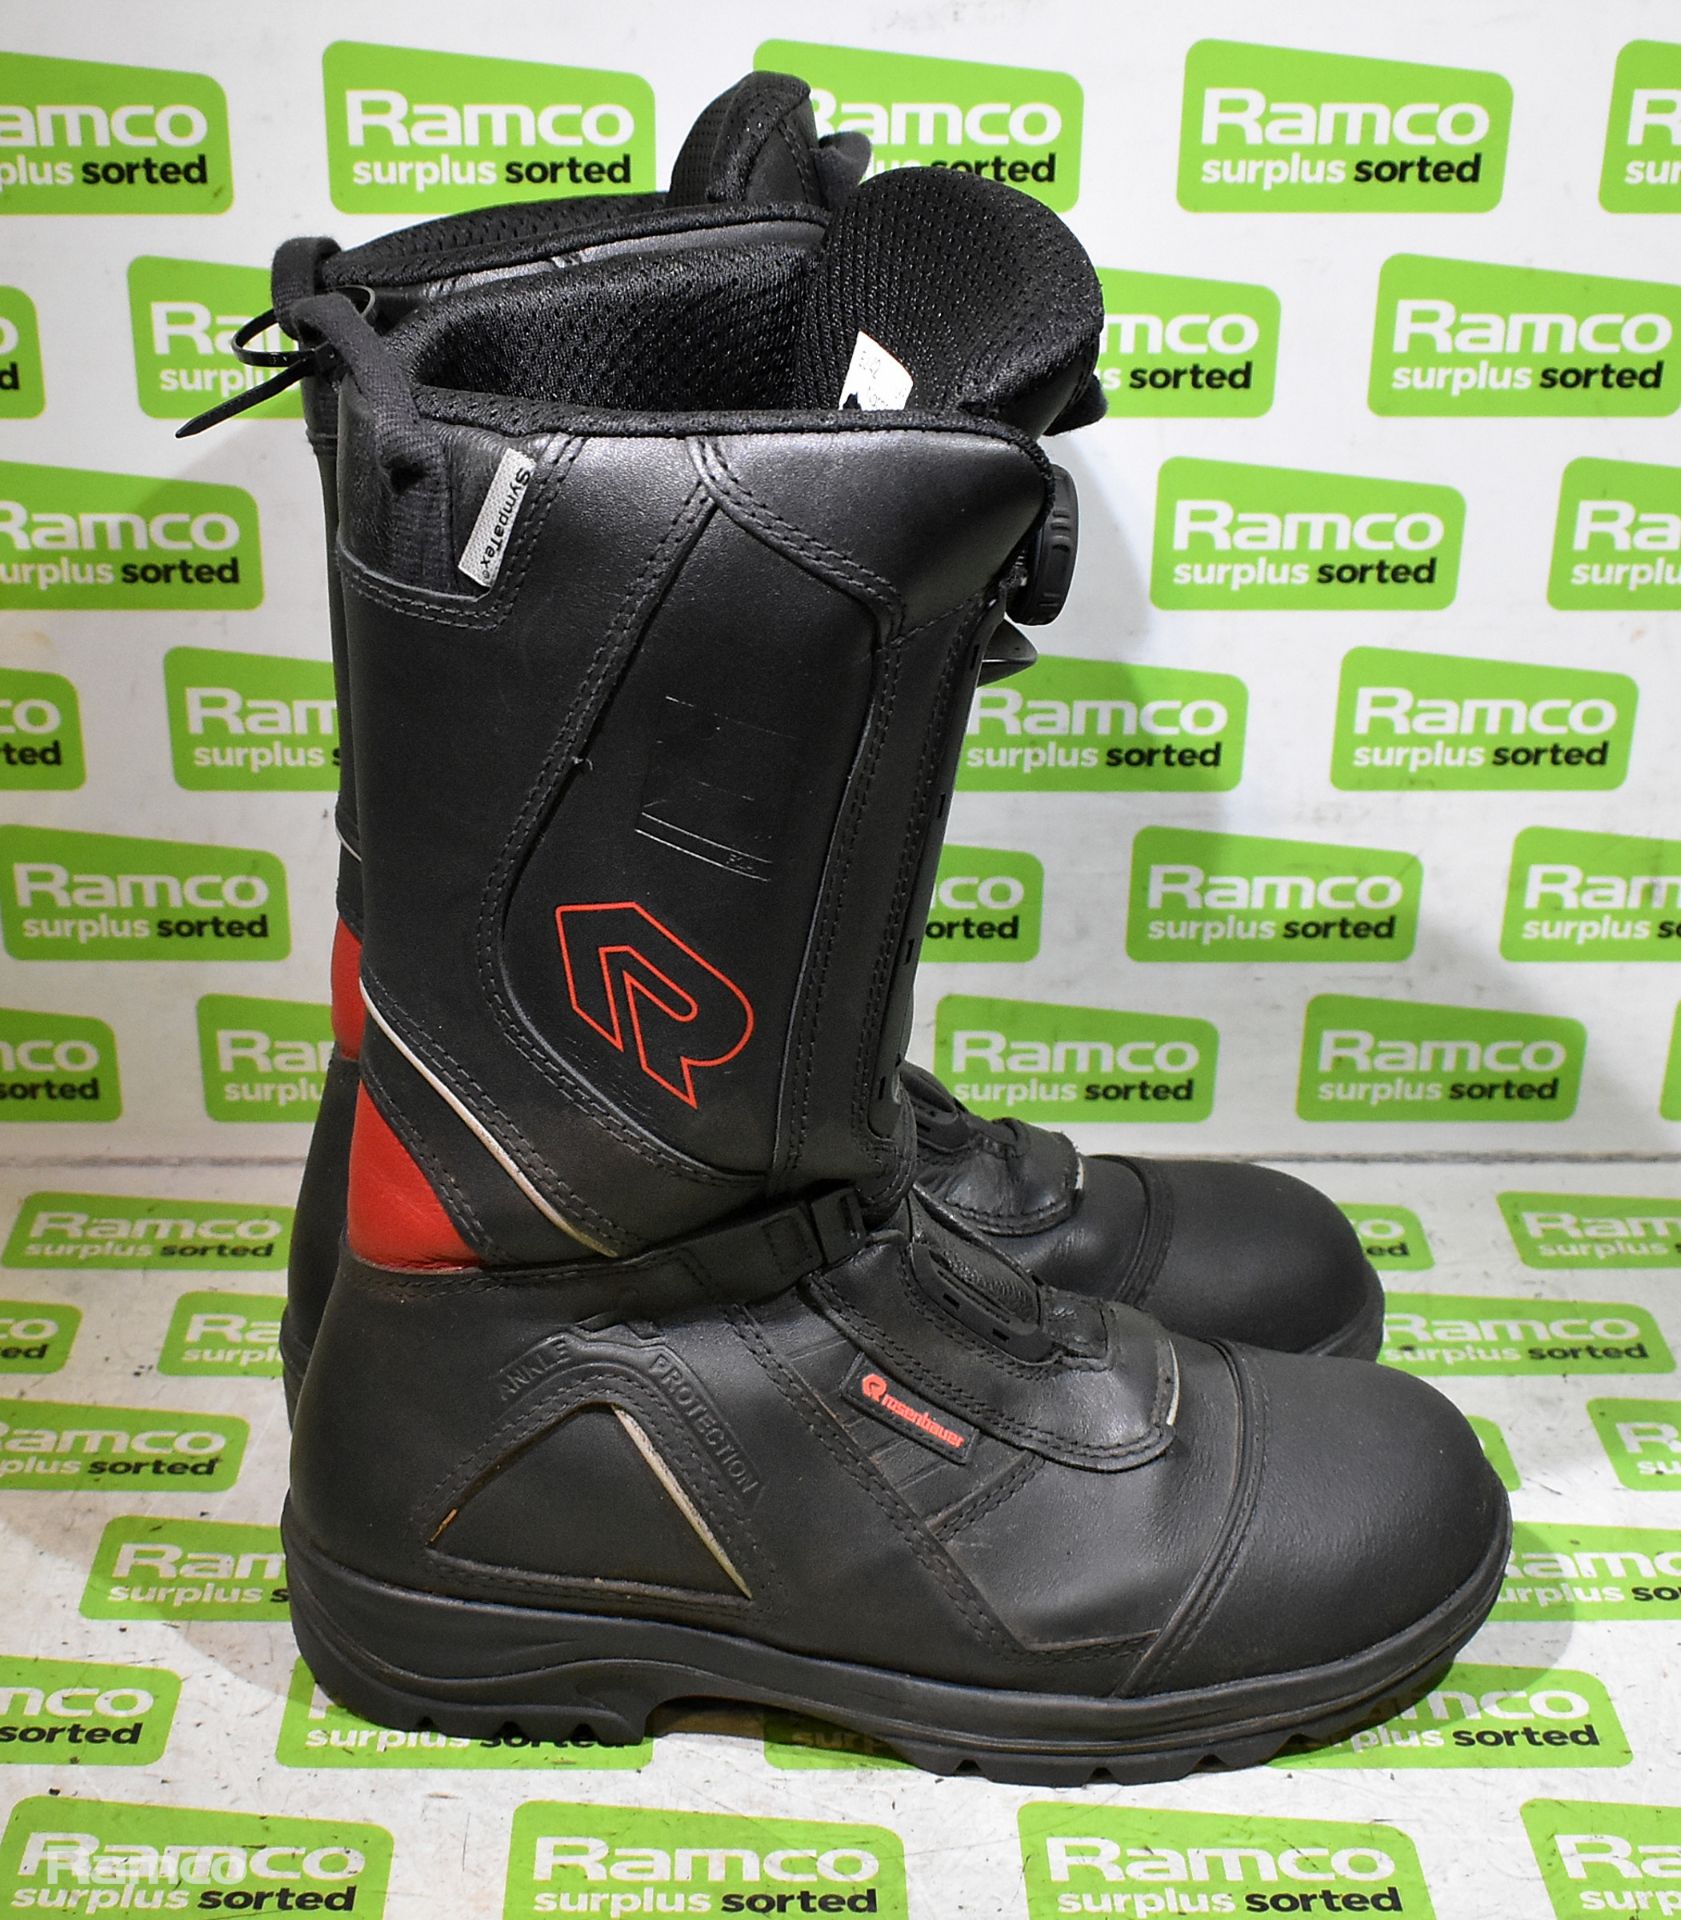 Rosenbauer Sympatex Fire & Heat Resistant Boots Pair - Size: EU 42, UK 8 - Image 2 of 4